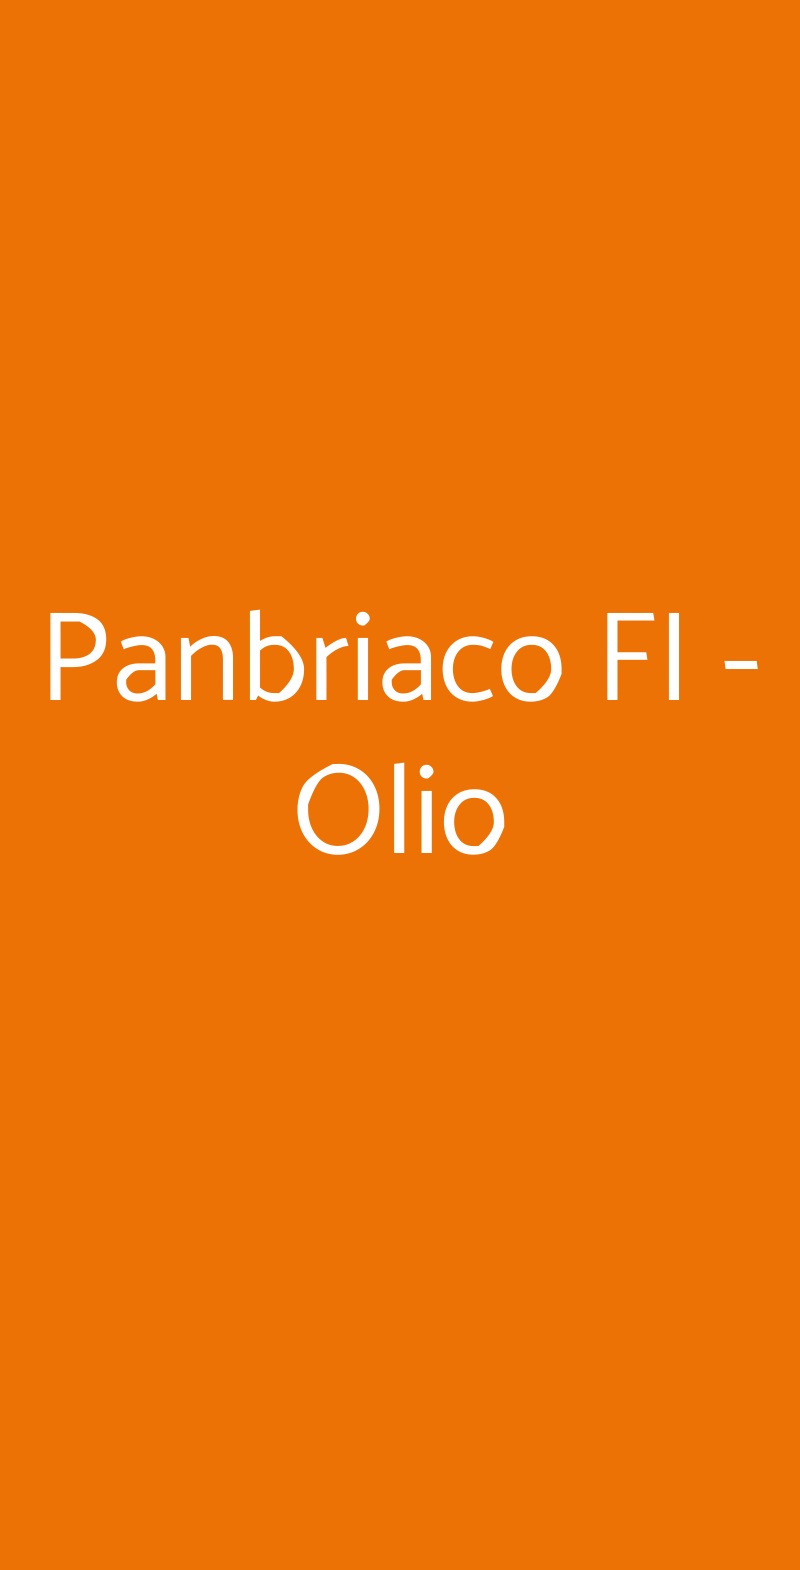 Panbriaco FI - Olio Firenze menù 1 pagina